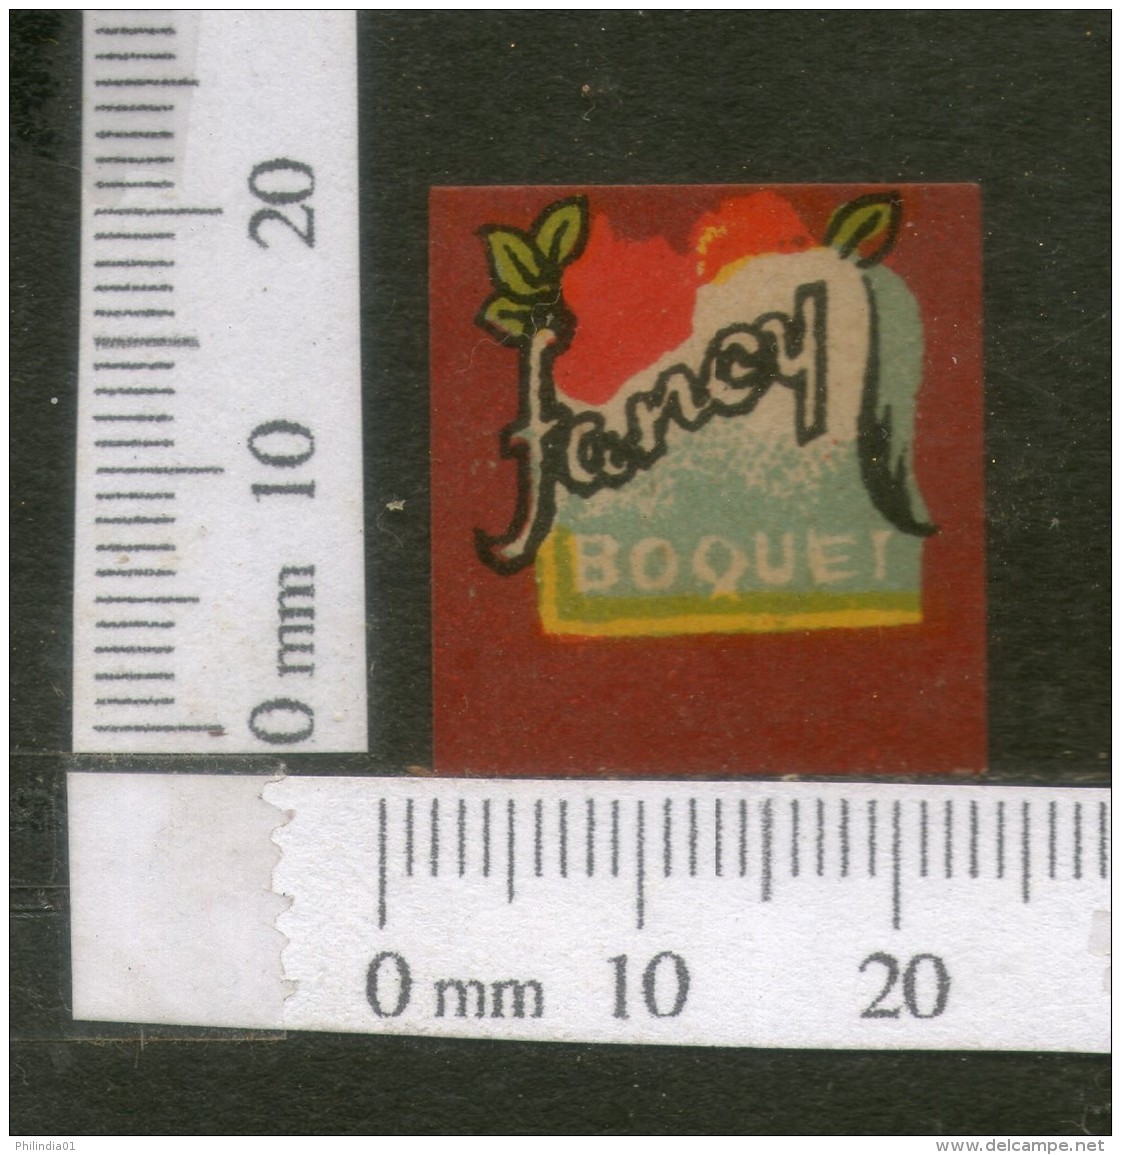 India Vintage Trade Label Fancy Boquet Essential Oil Label # 3294 - Labels